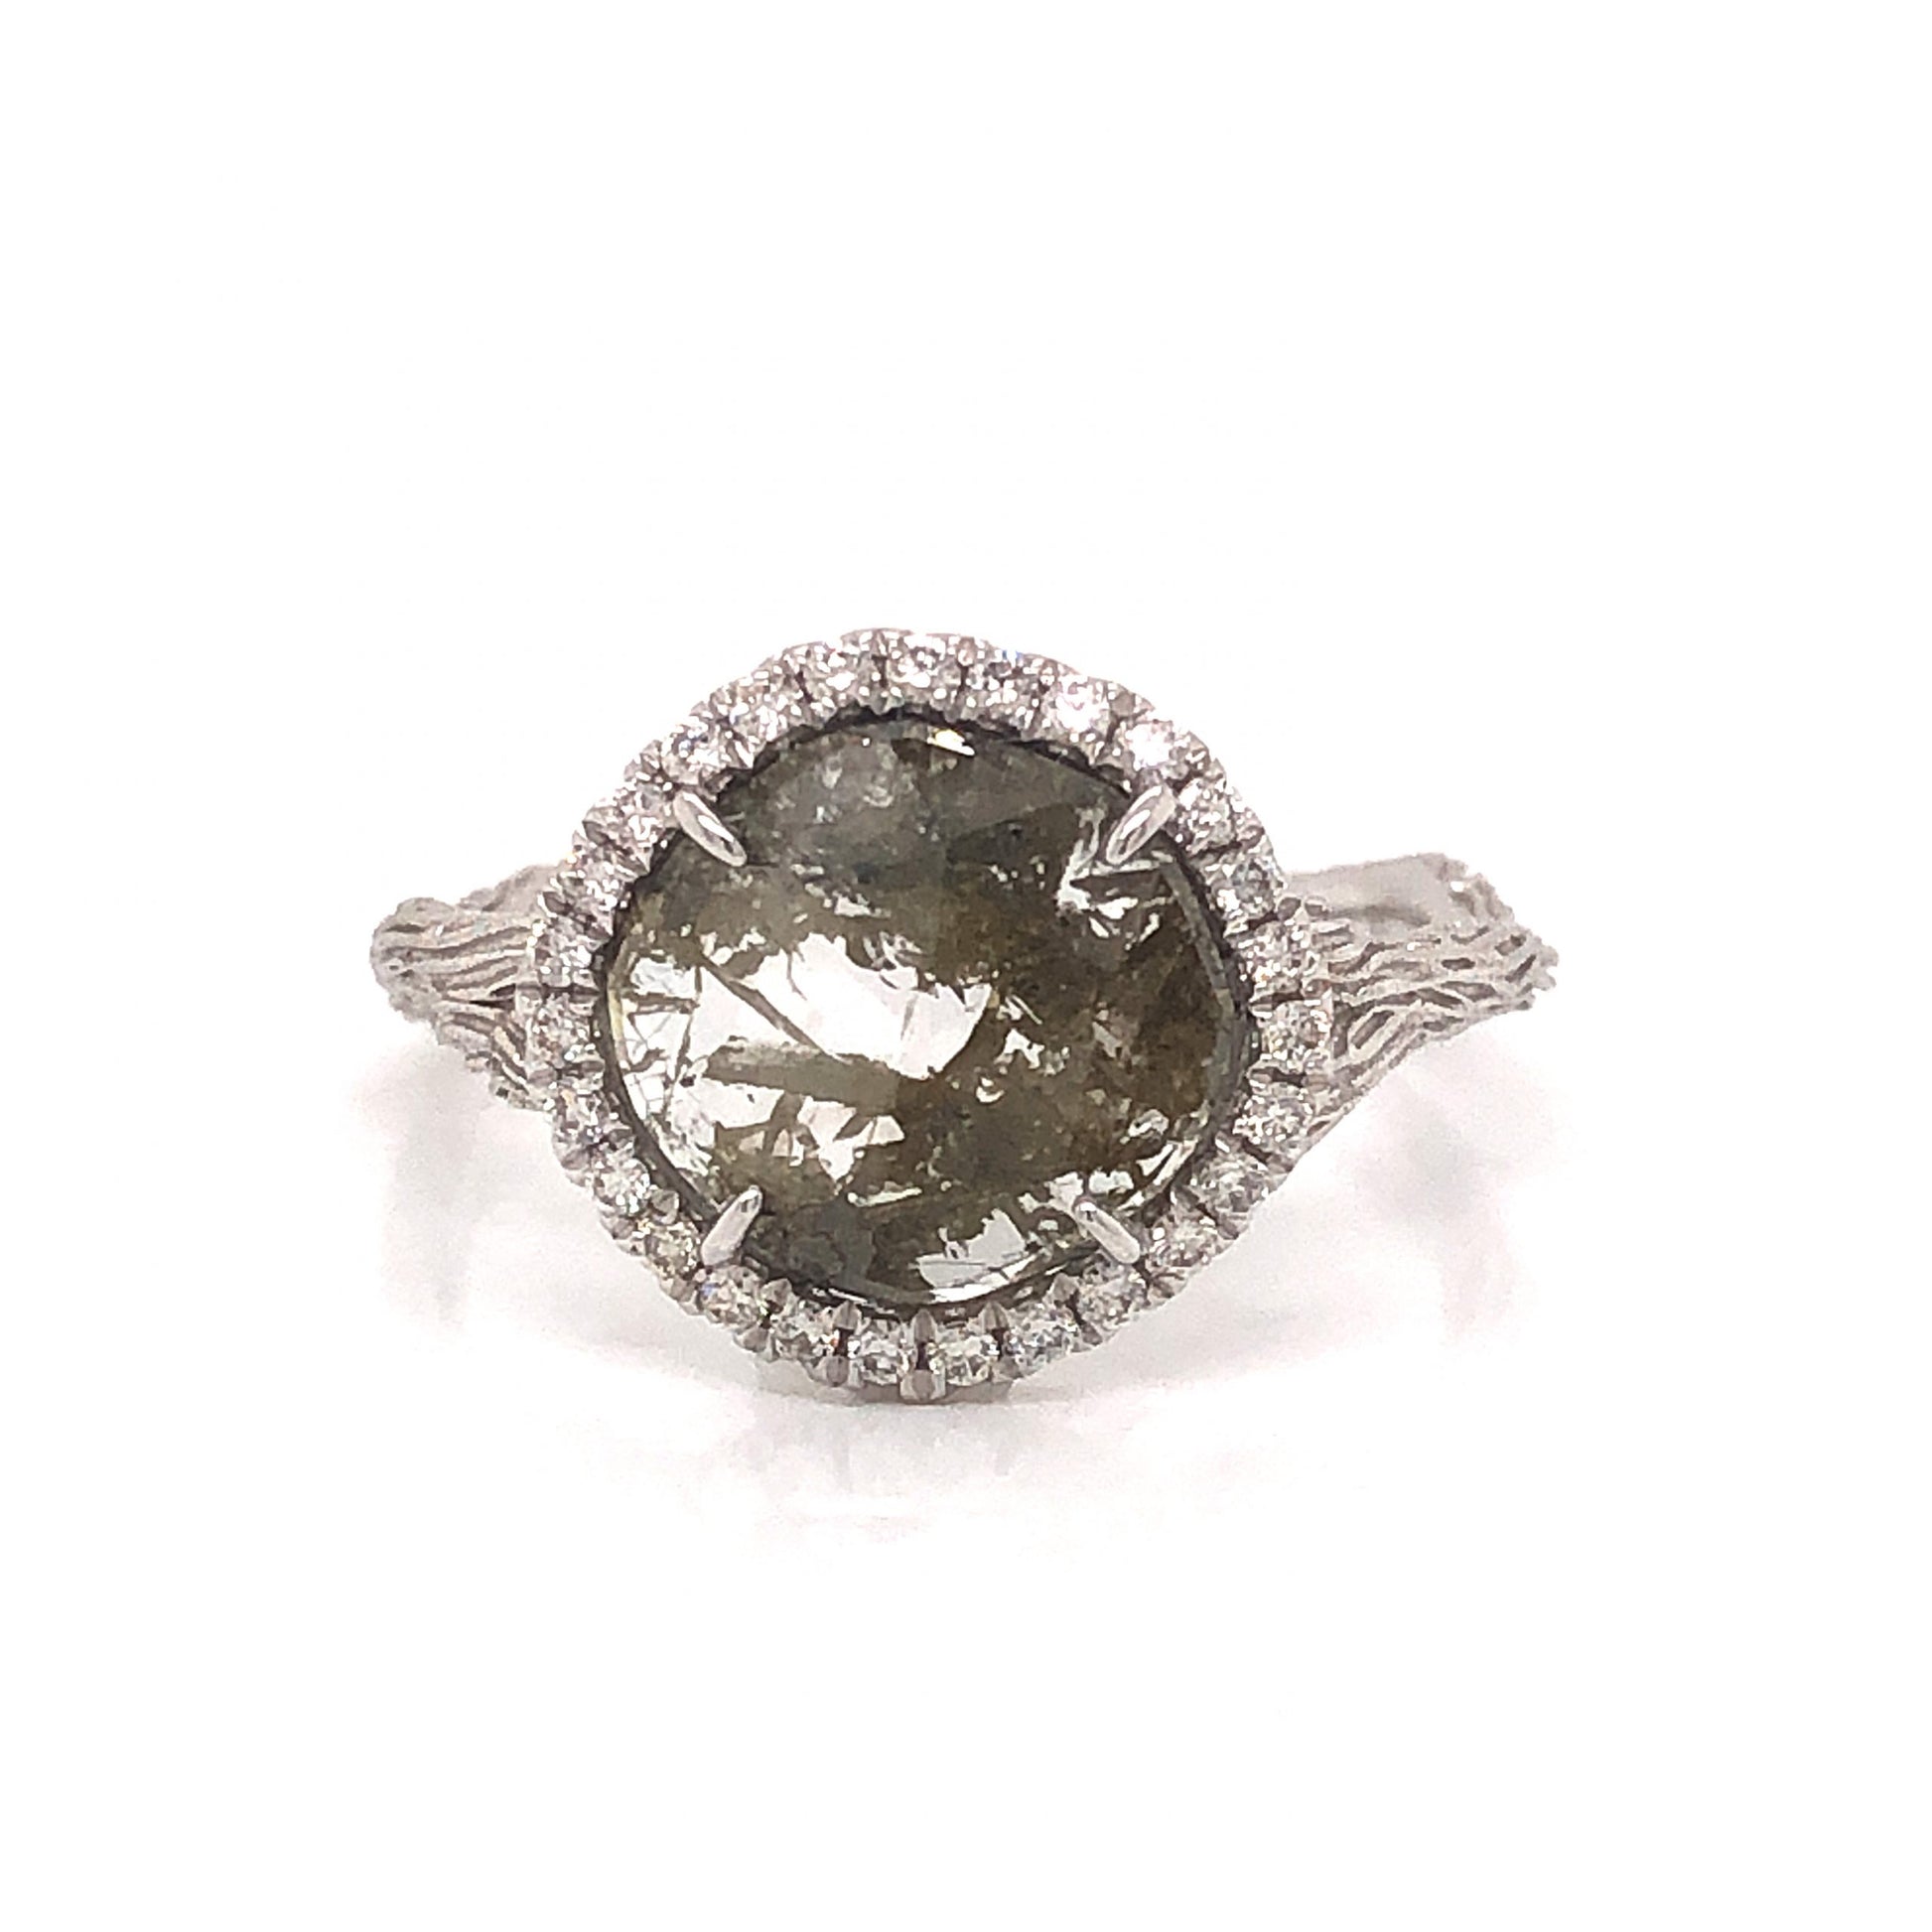 Rustic Round Diamond Halo Ring in 18k White GoldComposition: 18 Karat White GoldRing Size: 6.75Total Diamond Weight: 1.34 ctTotal Gram Weight: 2.7 gInscription: JHK 18k 750